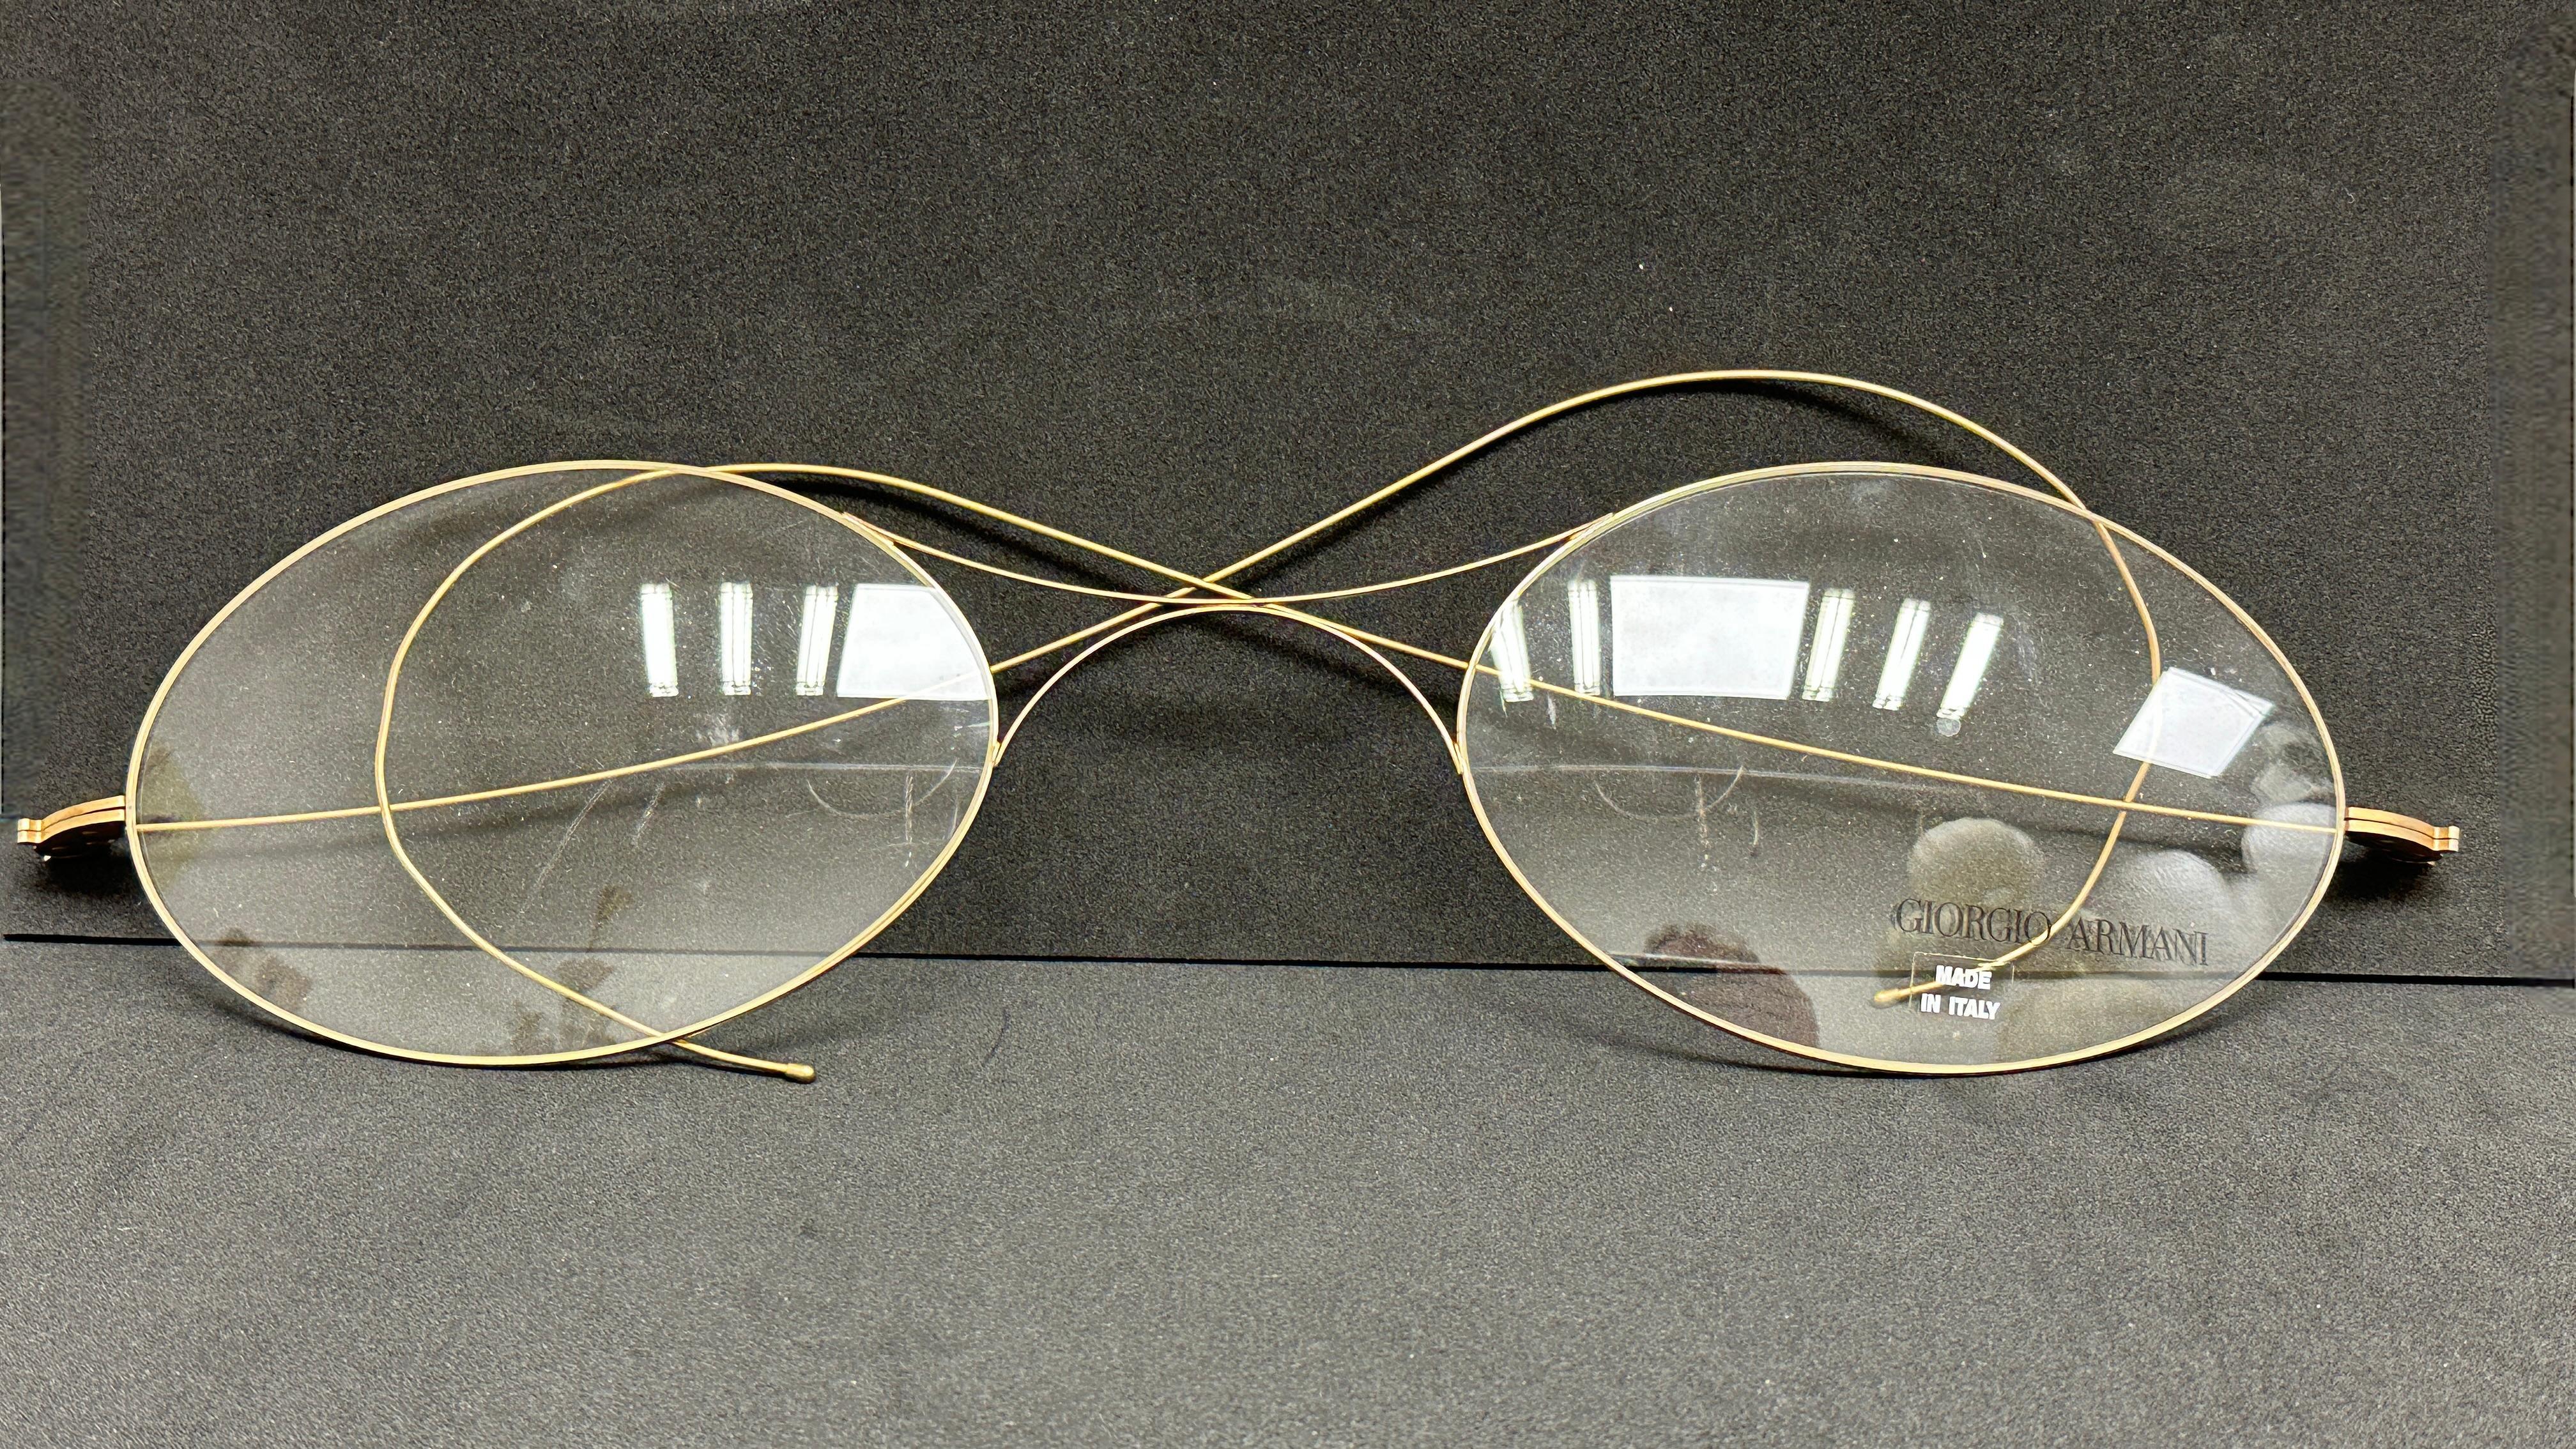 Large Mid-Century Italian Giorgio Armani Eye Glasses Factice Shop Display Piece For Sale 1